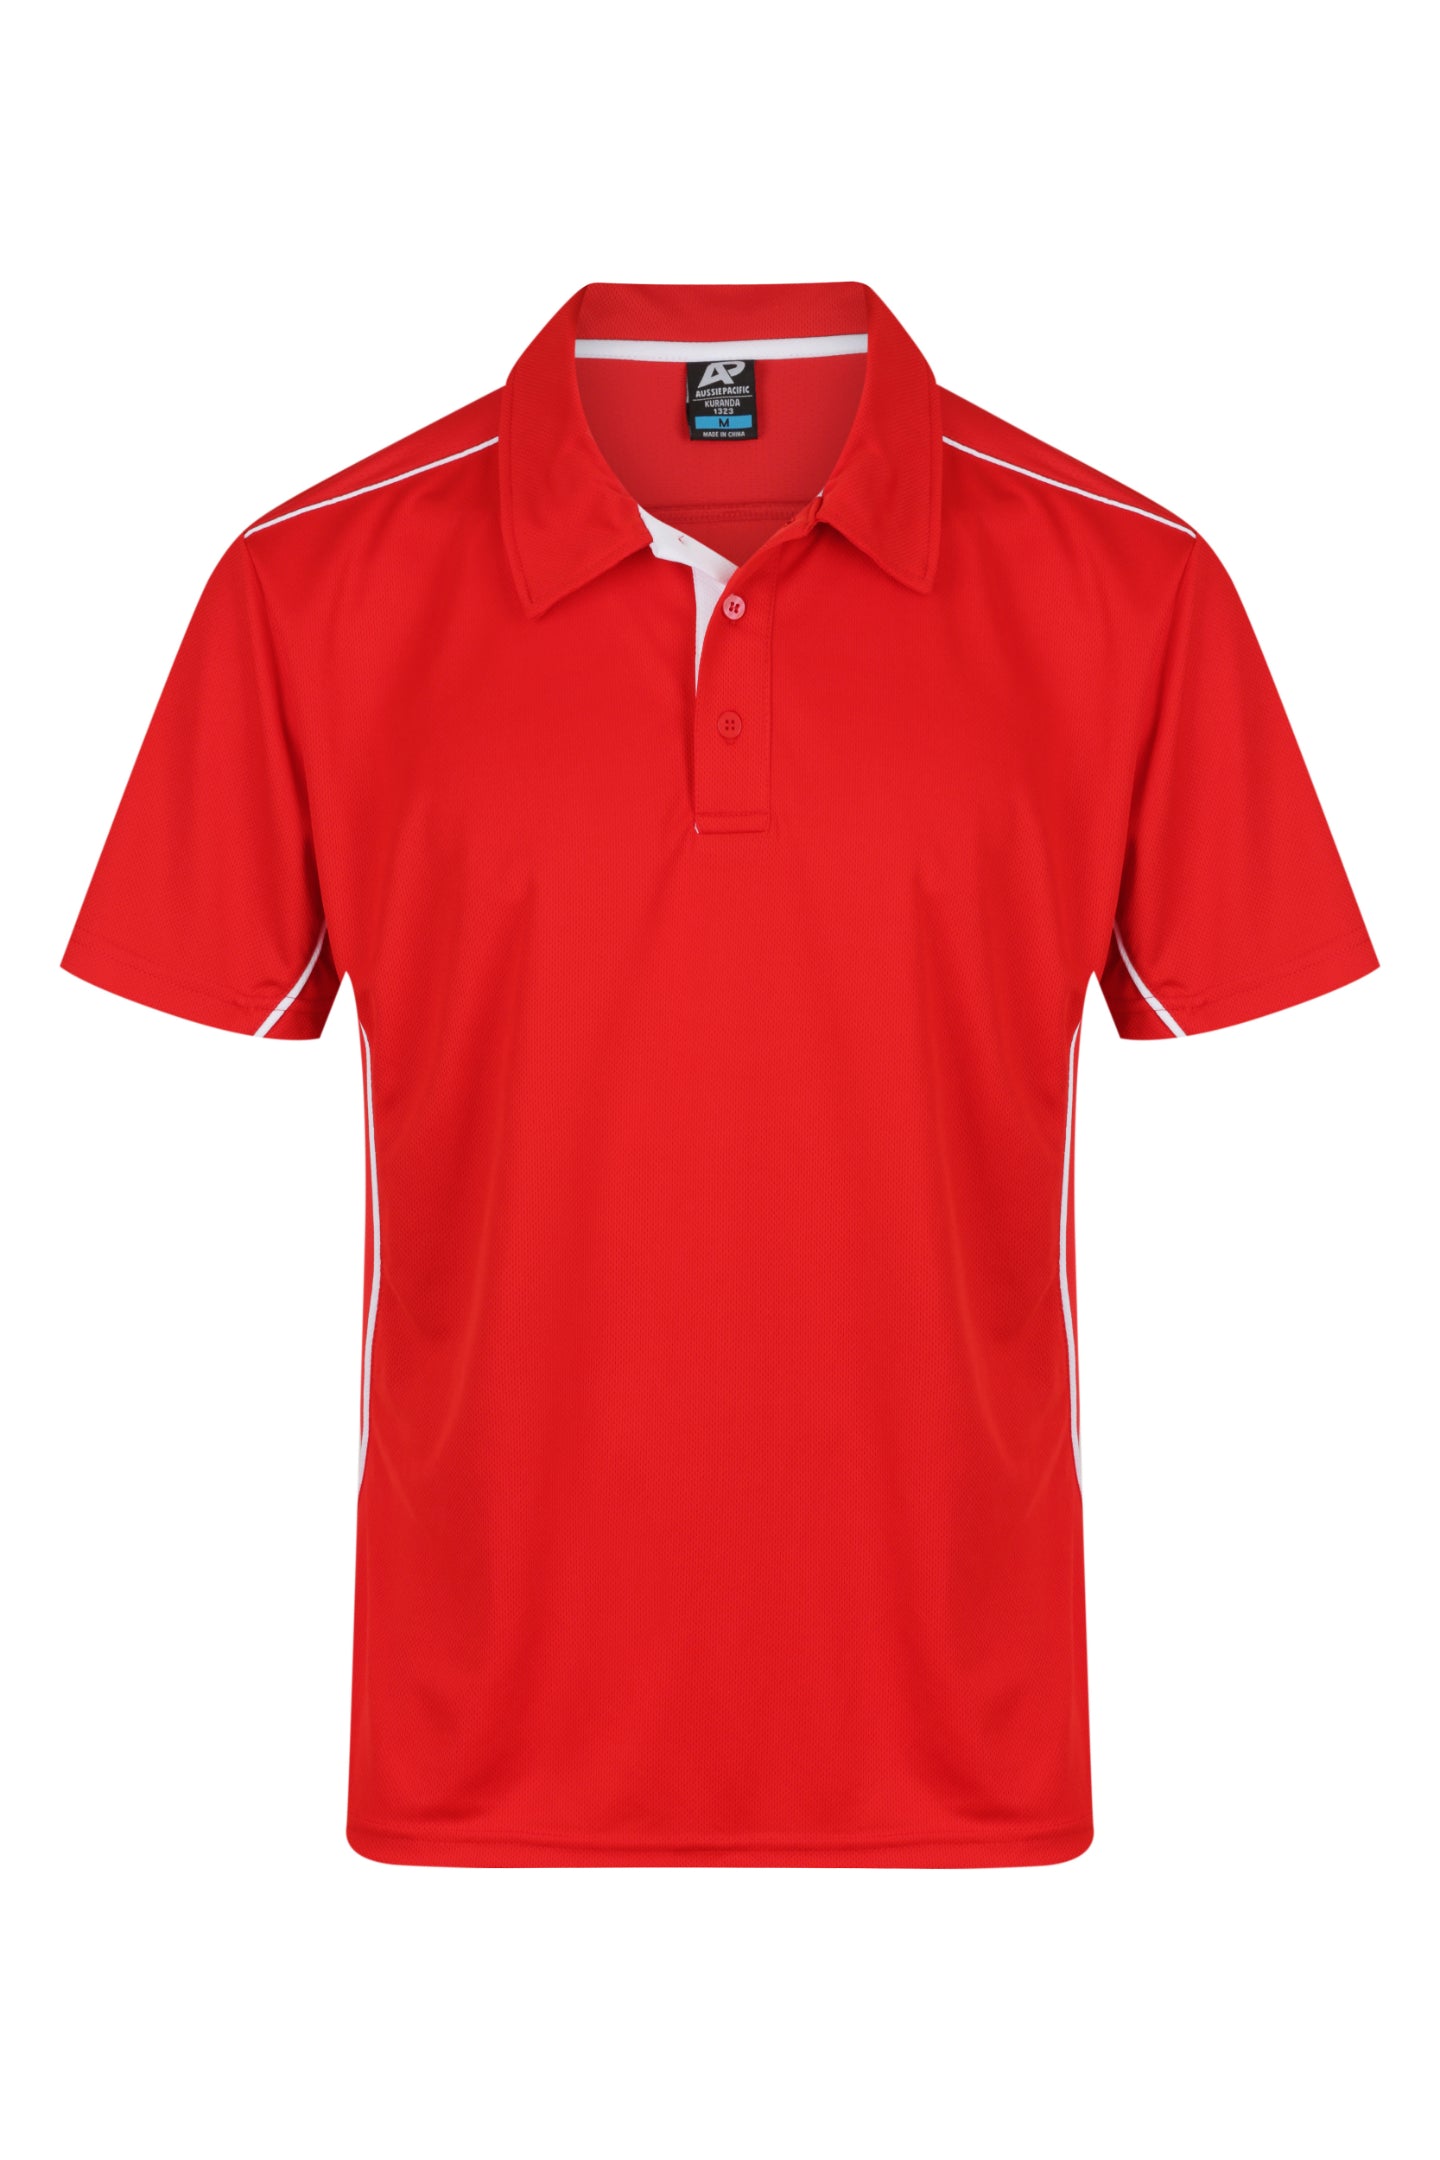 Custom Kuranda Uniform Polo Shirt - Red/White